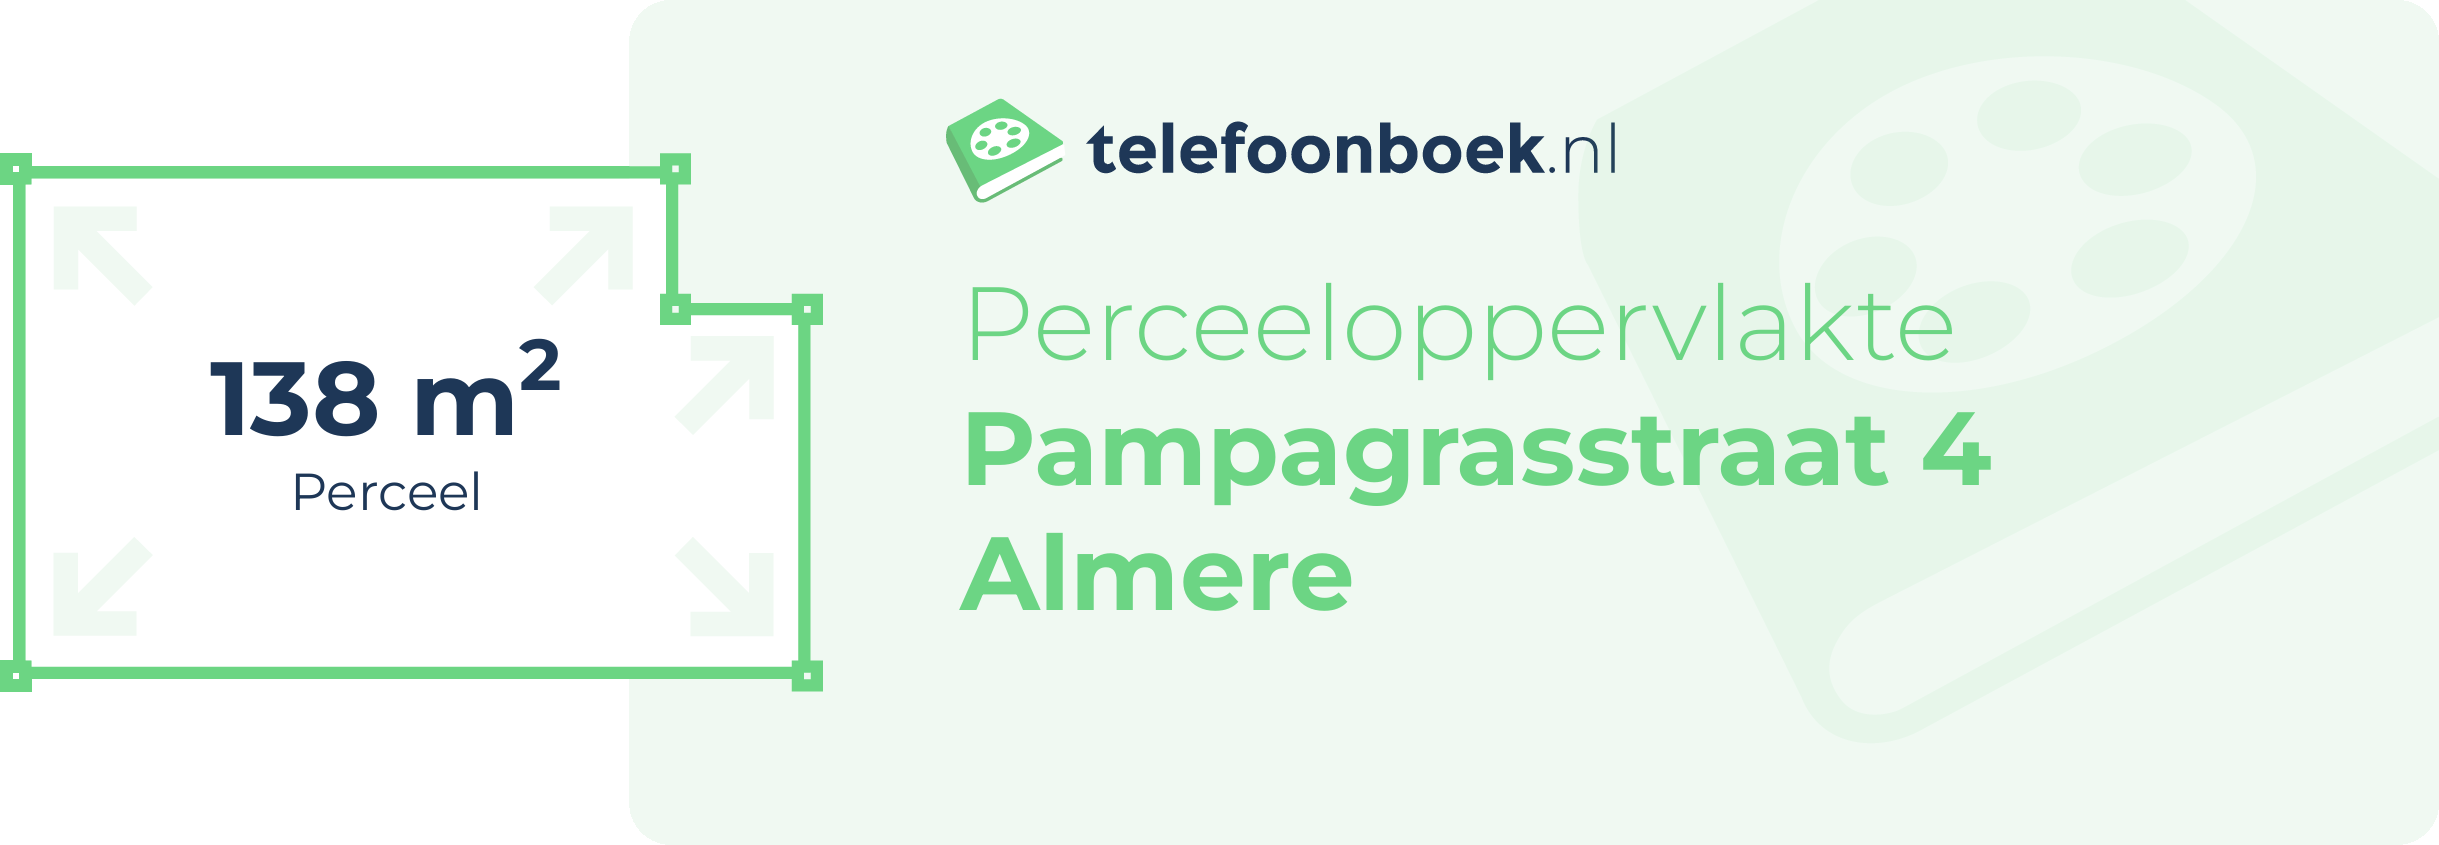 Perceeloppervlakte Pampagrasstraat 4 Almere